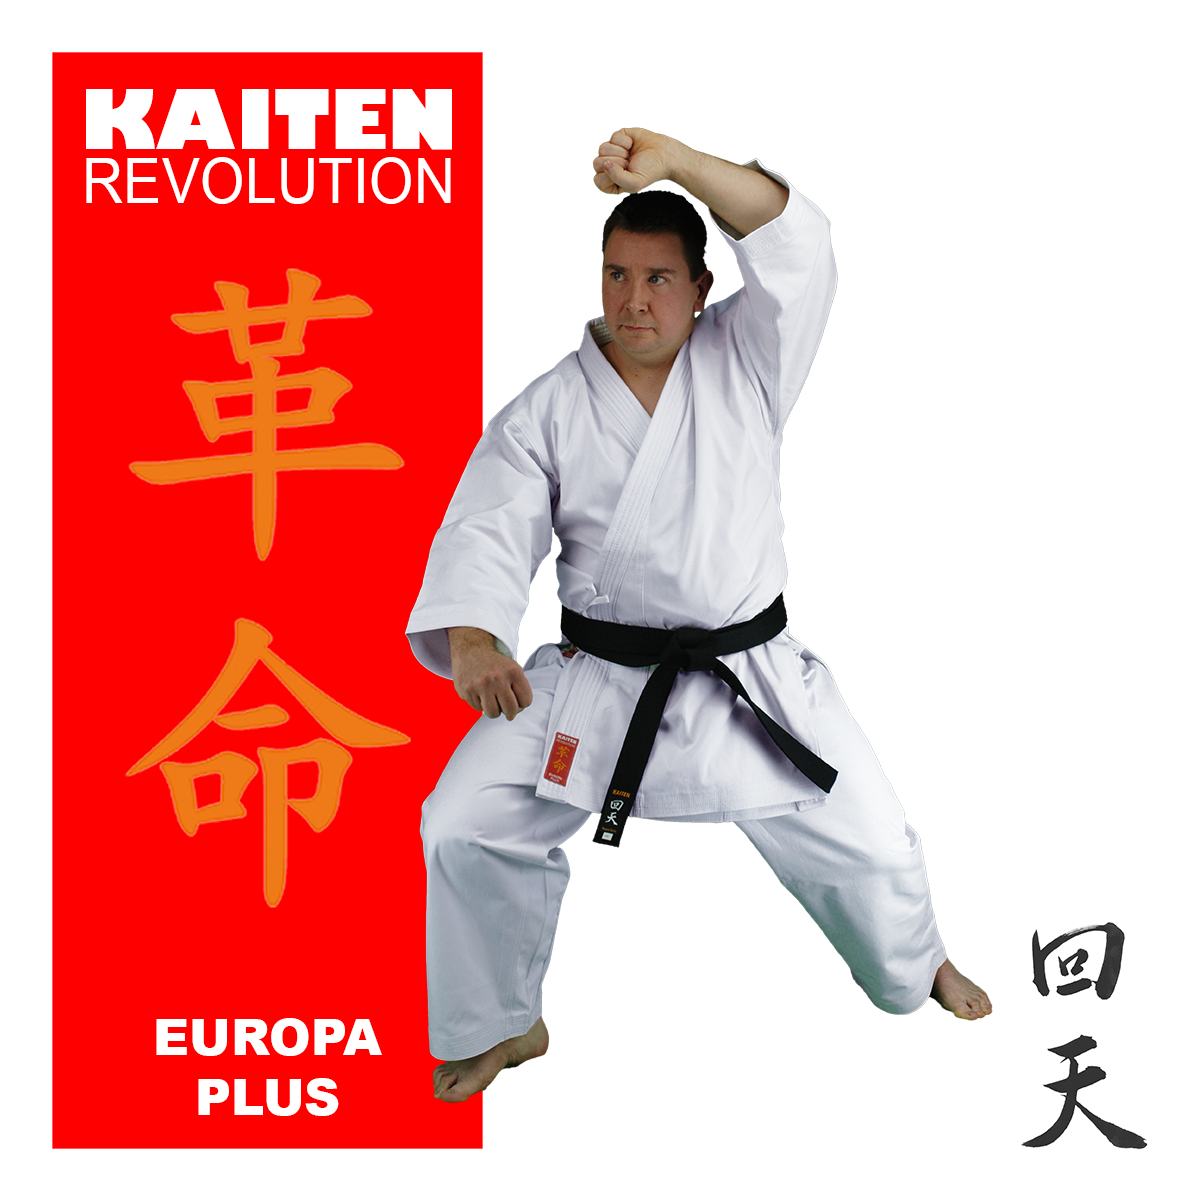 Kaiten Karateanzug Revolution America Regular